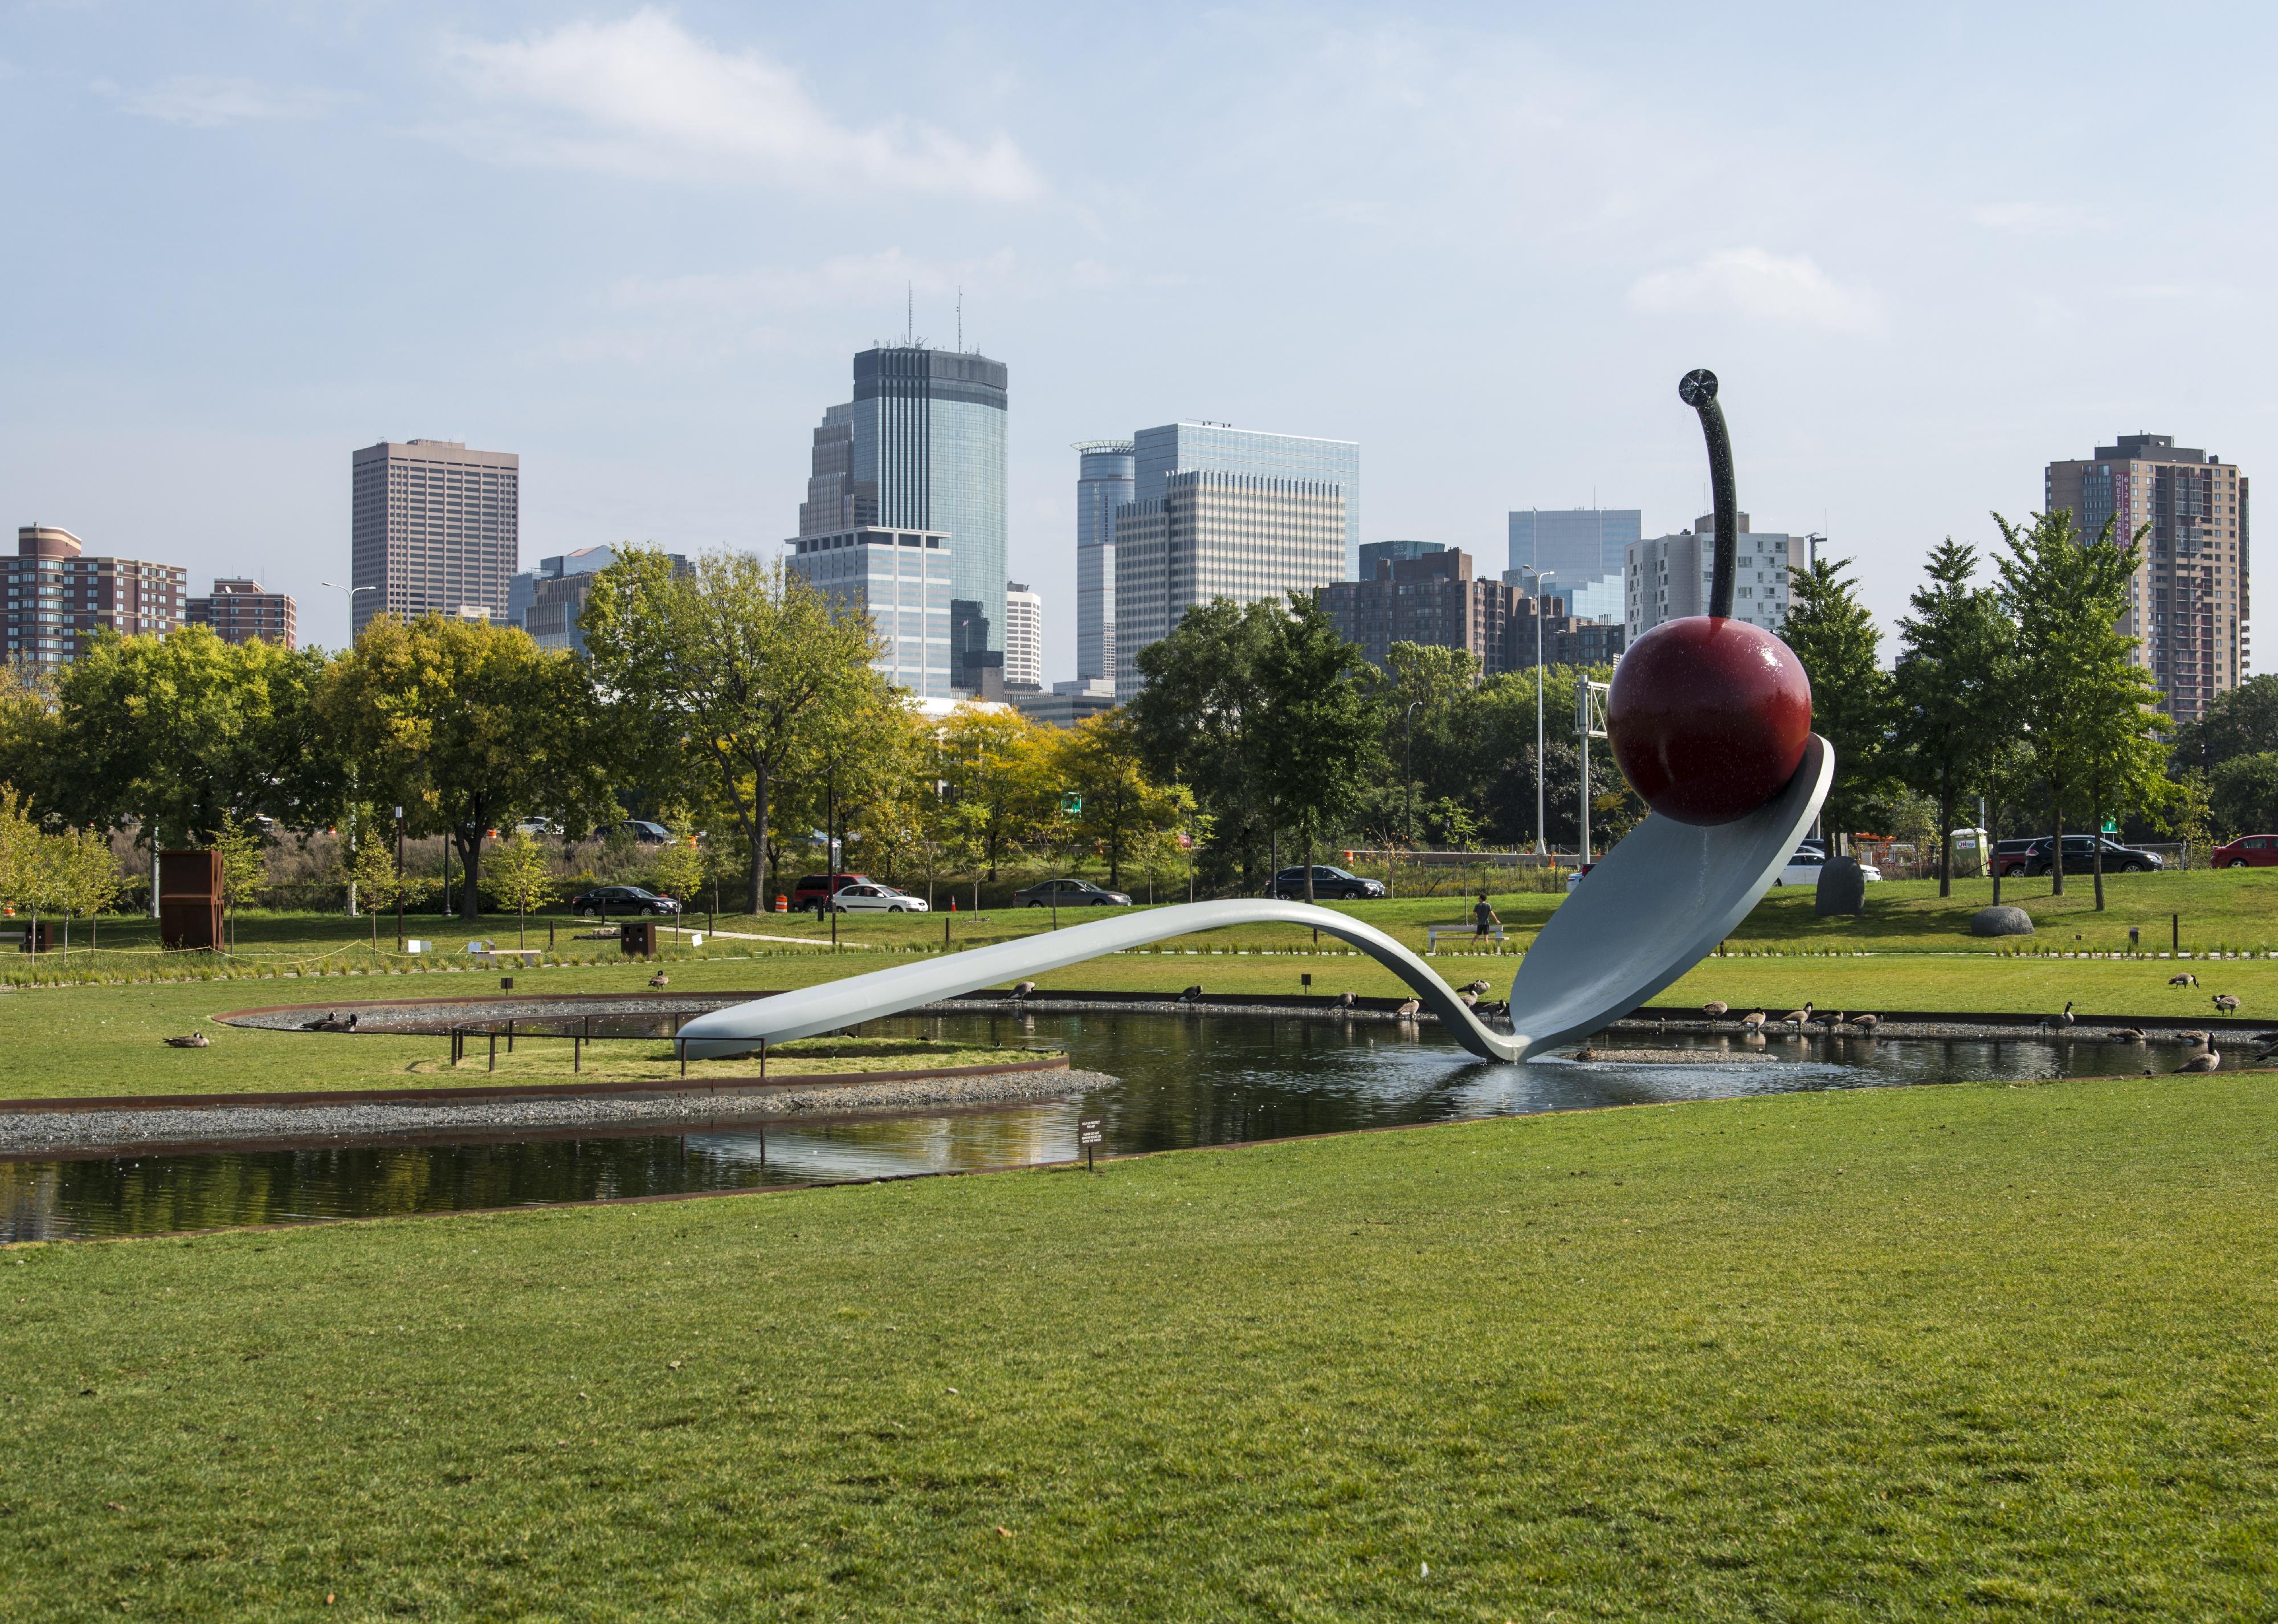 The Spoonbridge and Cherry sculpture in Minneapolis.